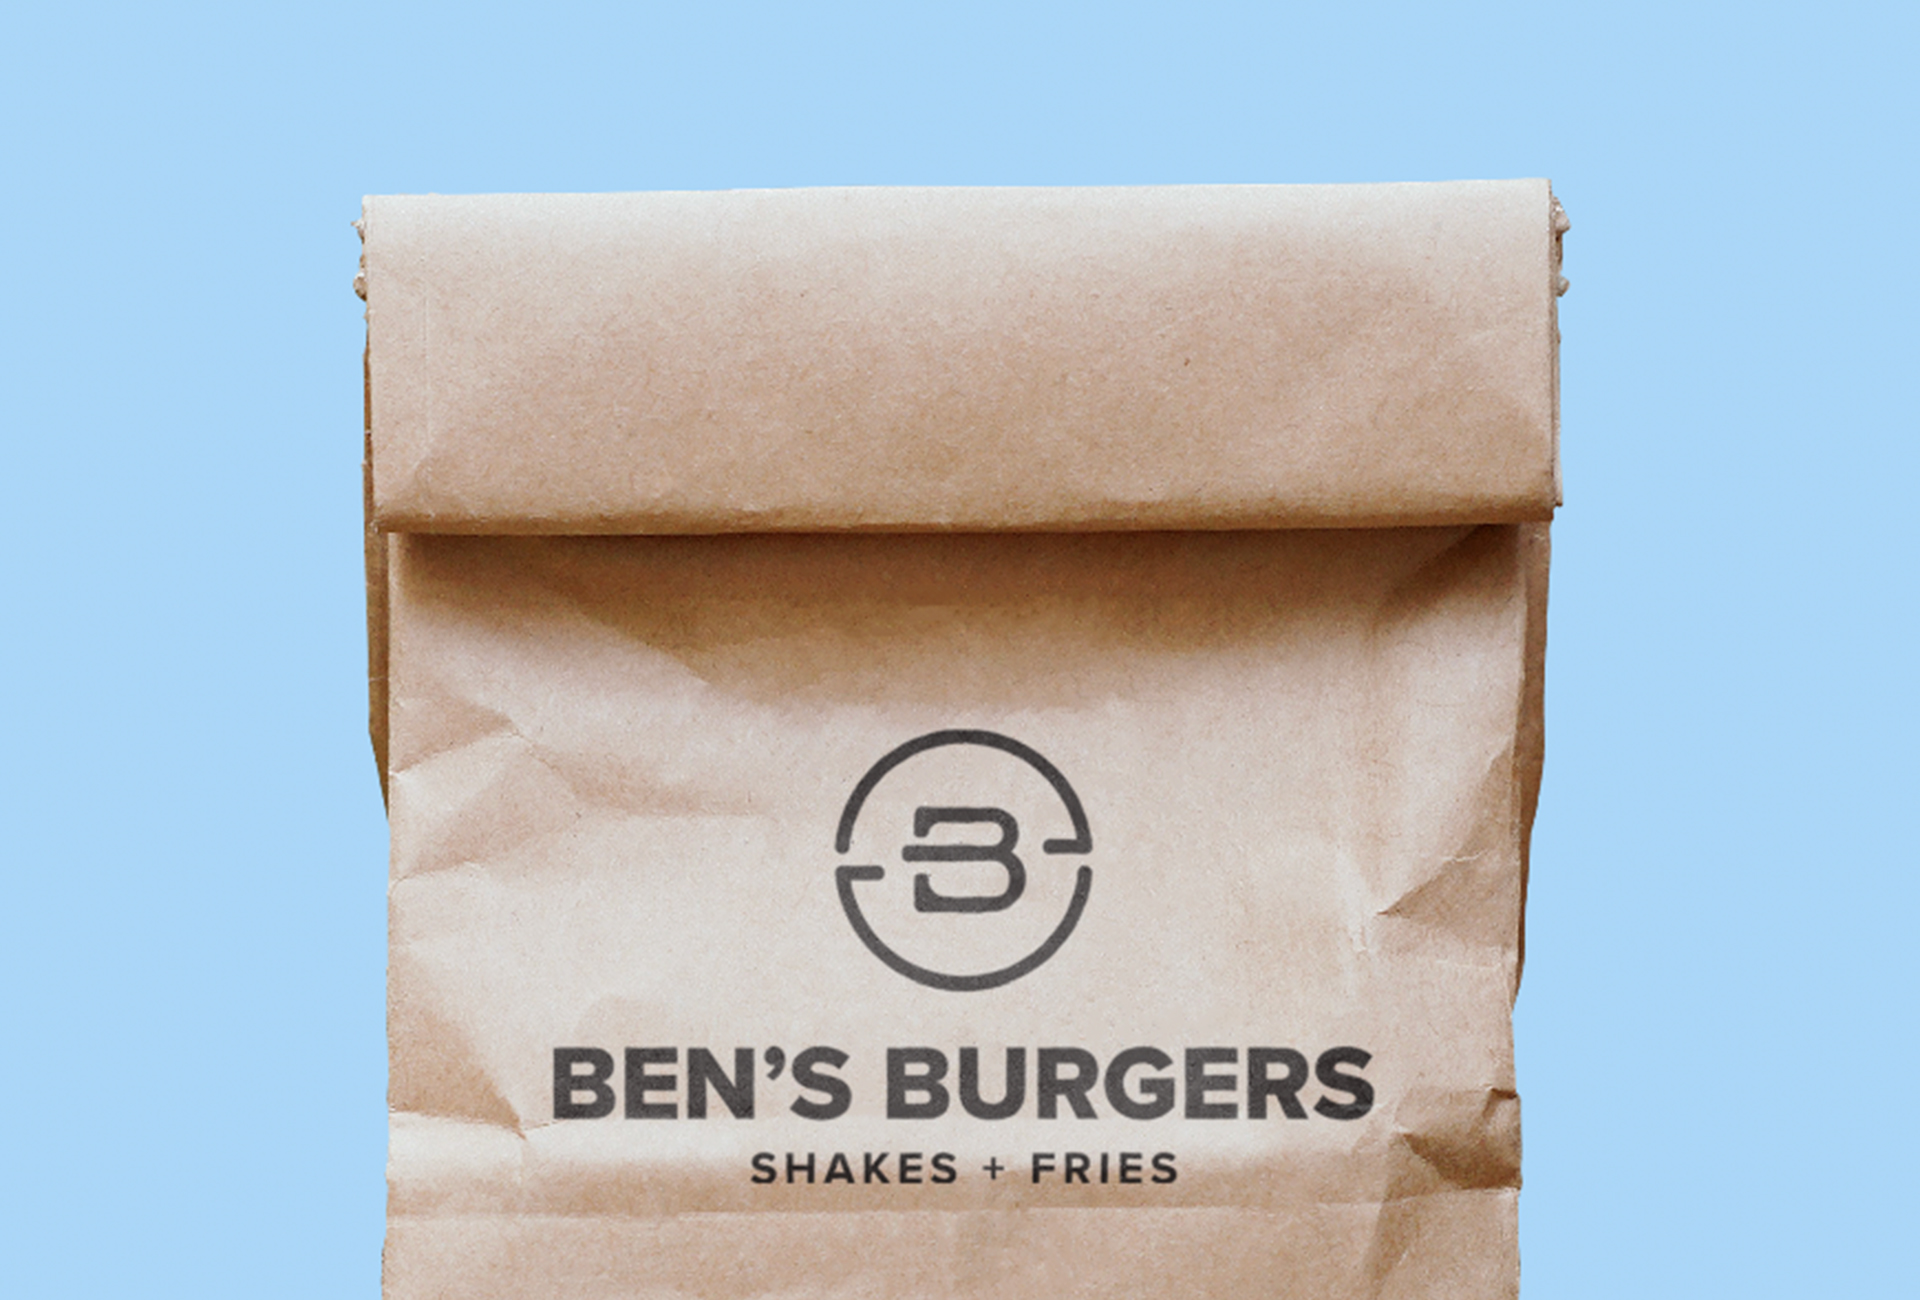 Ben's Burgers logo on bag